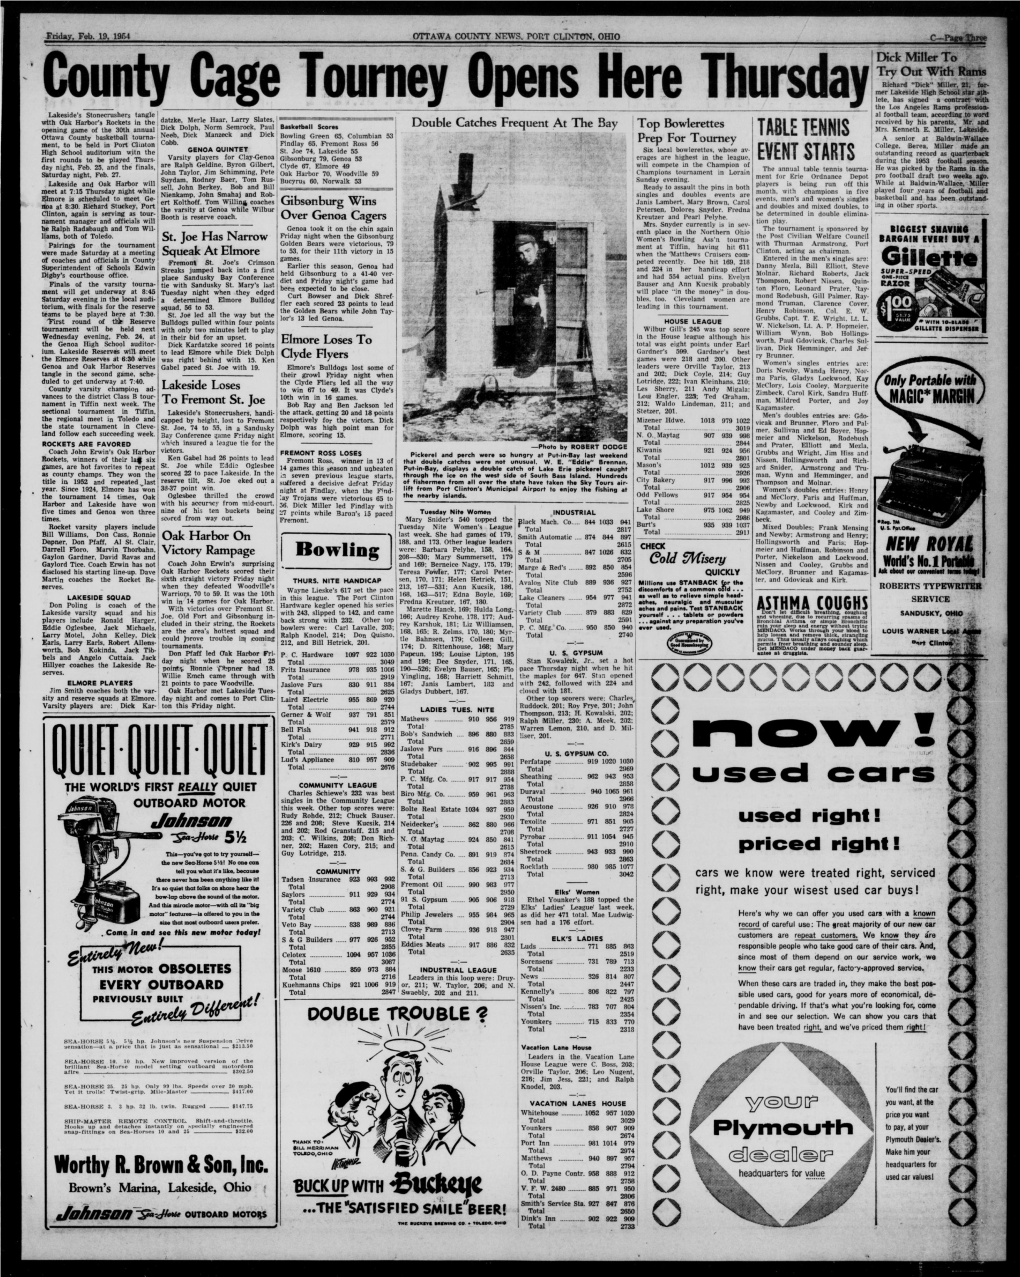 Ottawa County News. (Port Clinton, Ohio), 1954-02-19